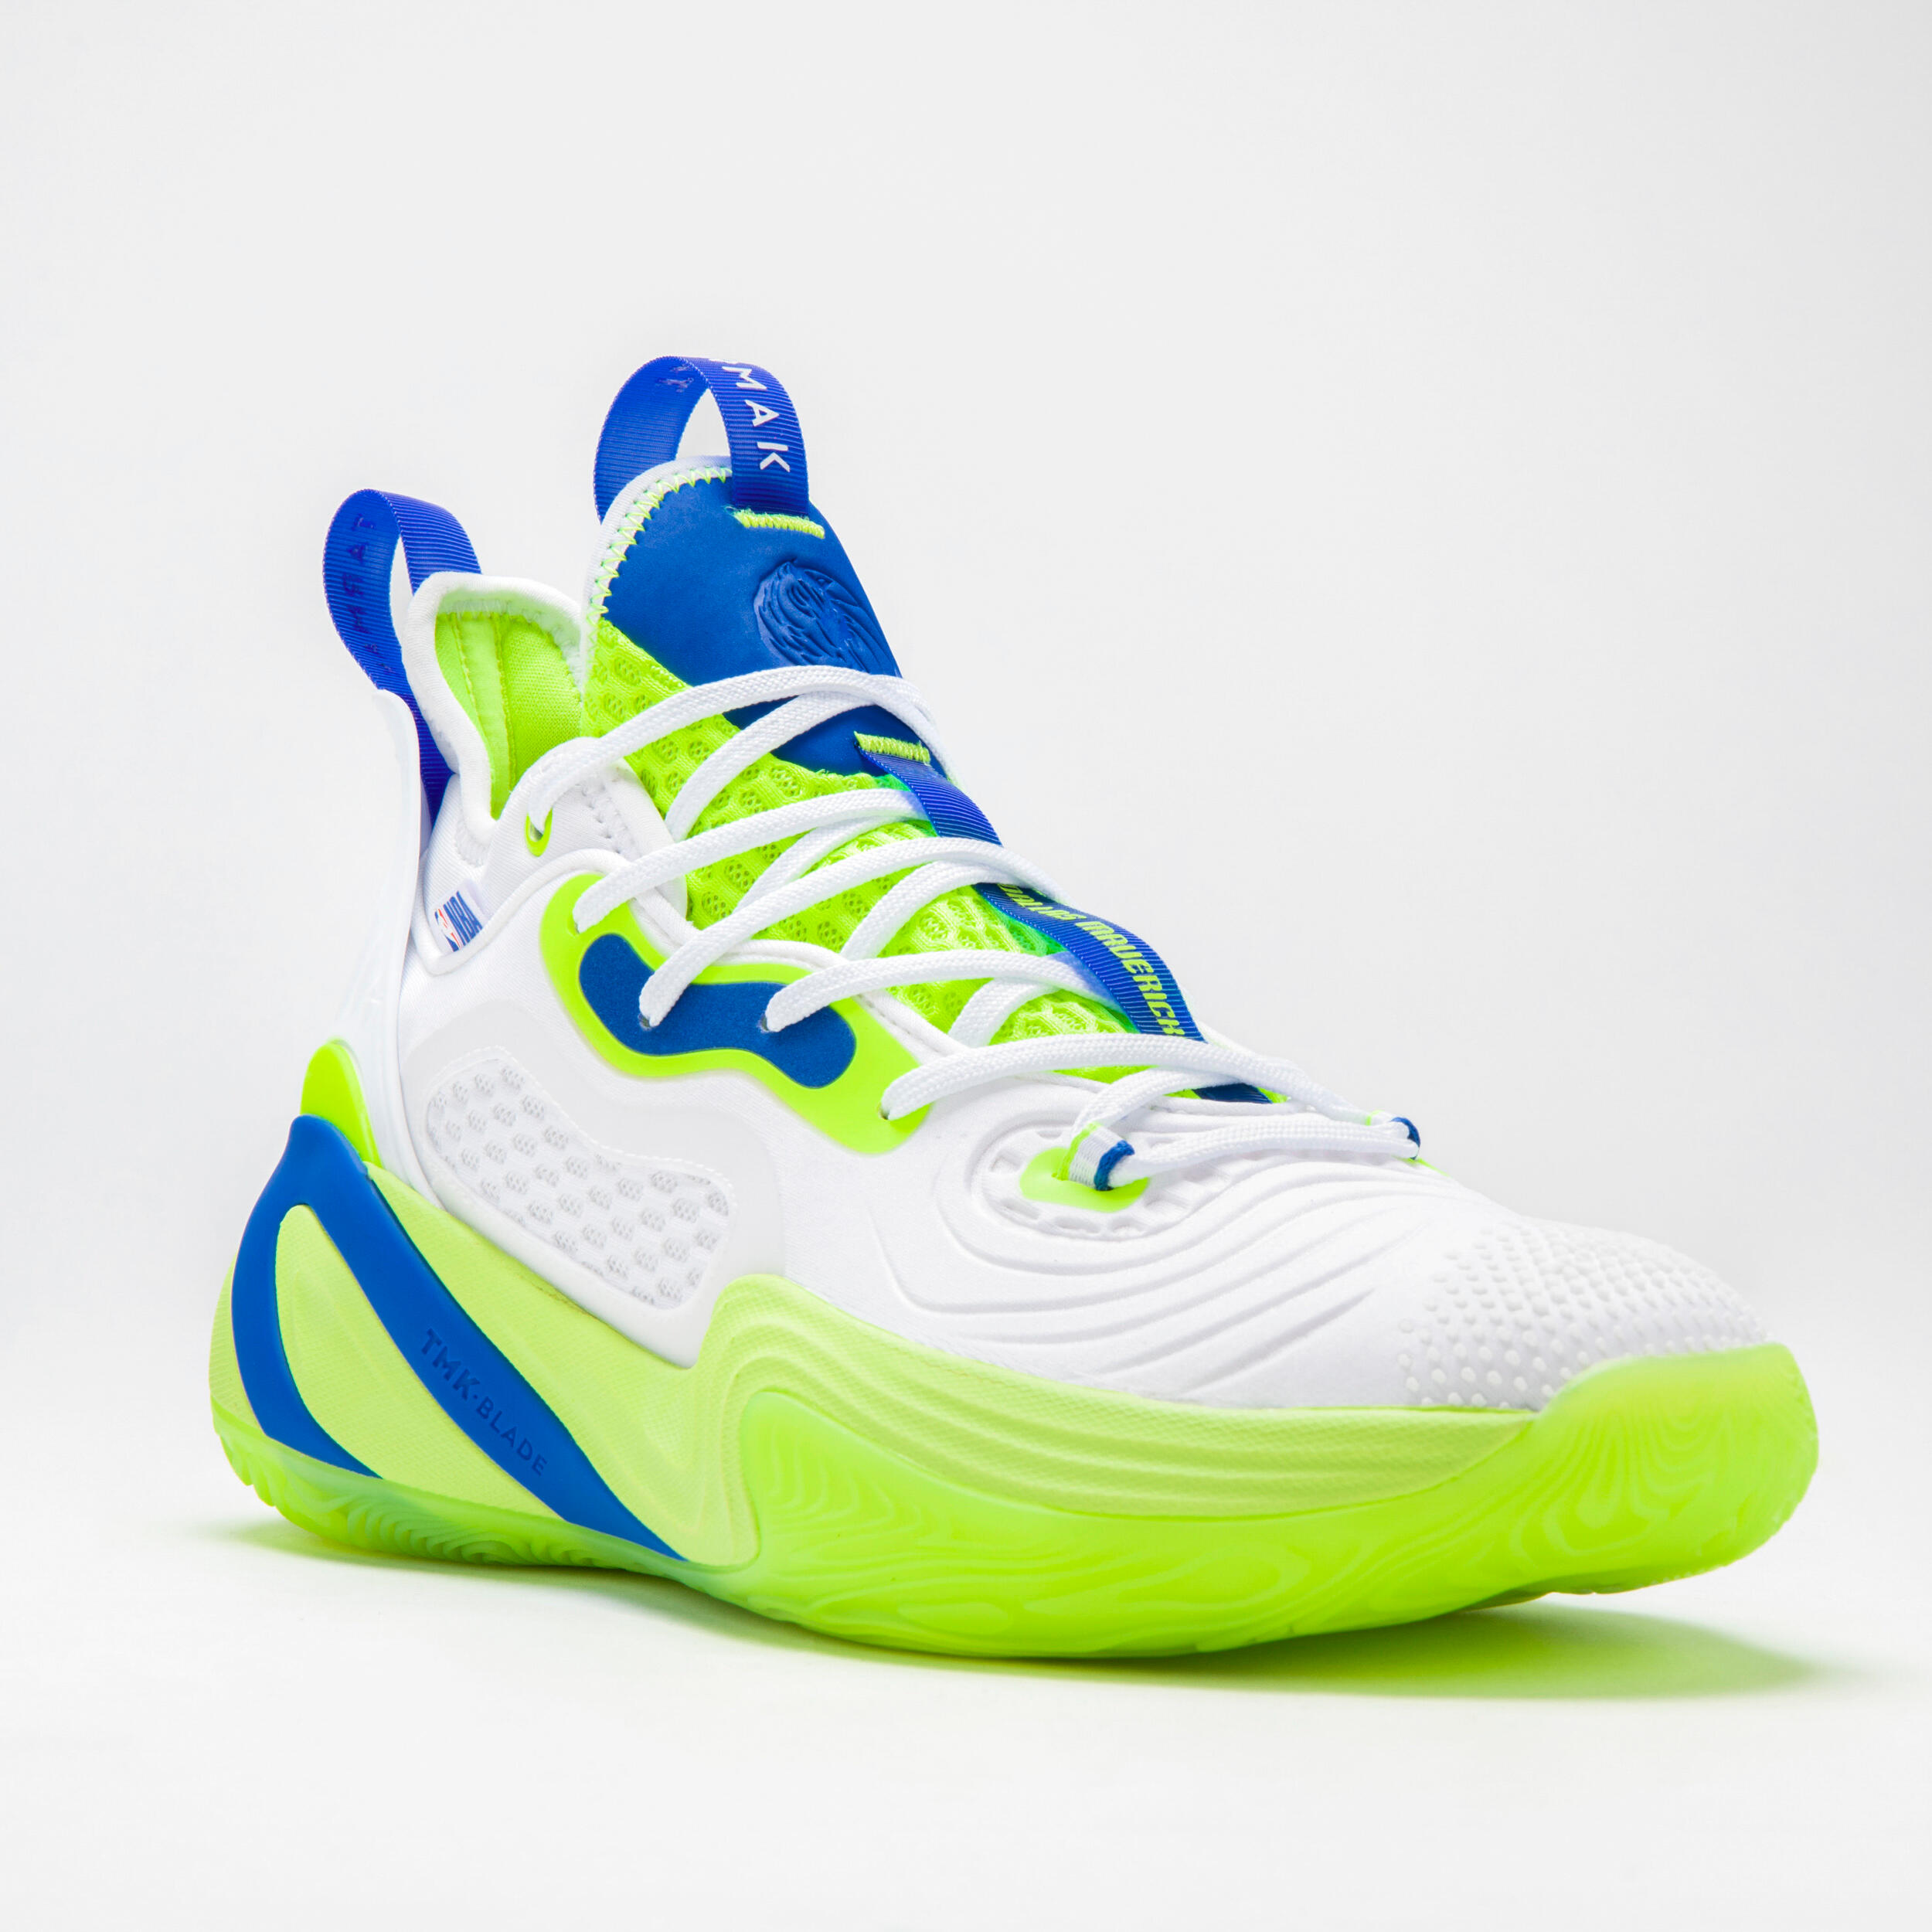 Men's/Women's Basketball Shoes SE900 - NBA Dallas Mavericks/White 3/16